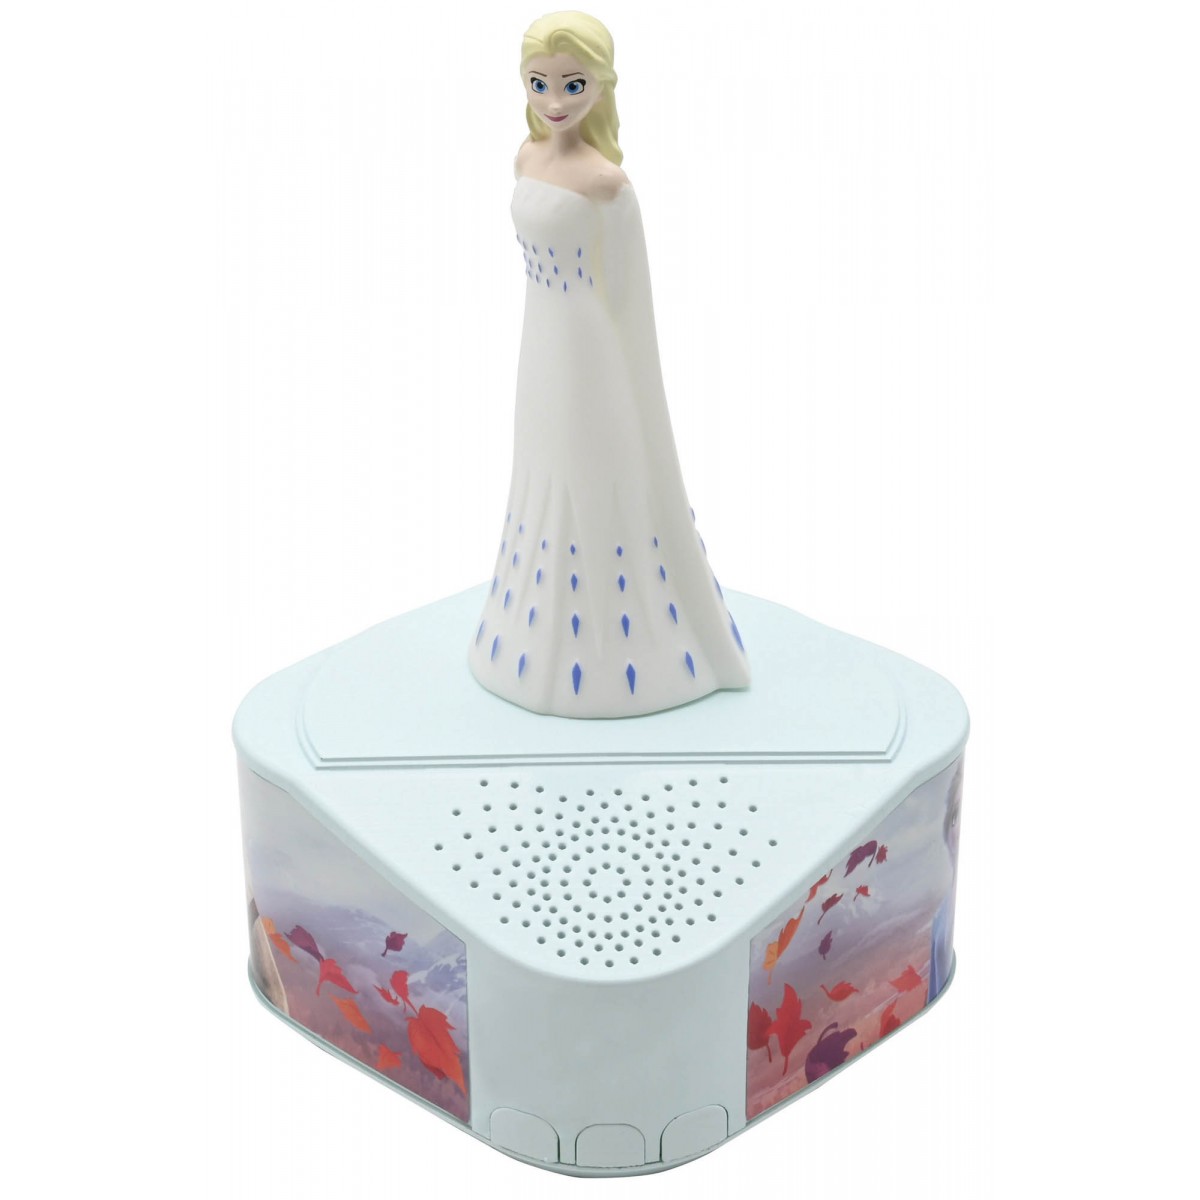 Frozen Speaker, Luminous figurine